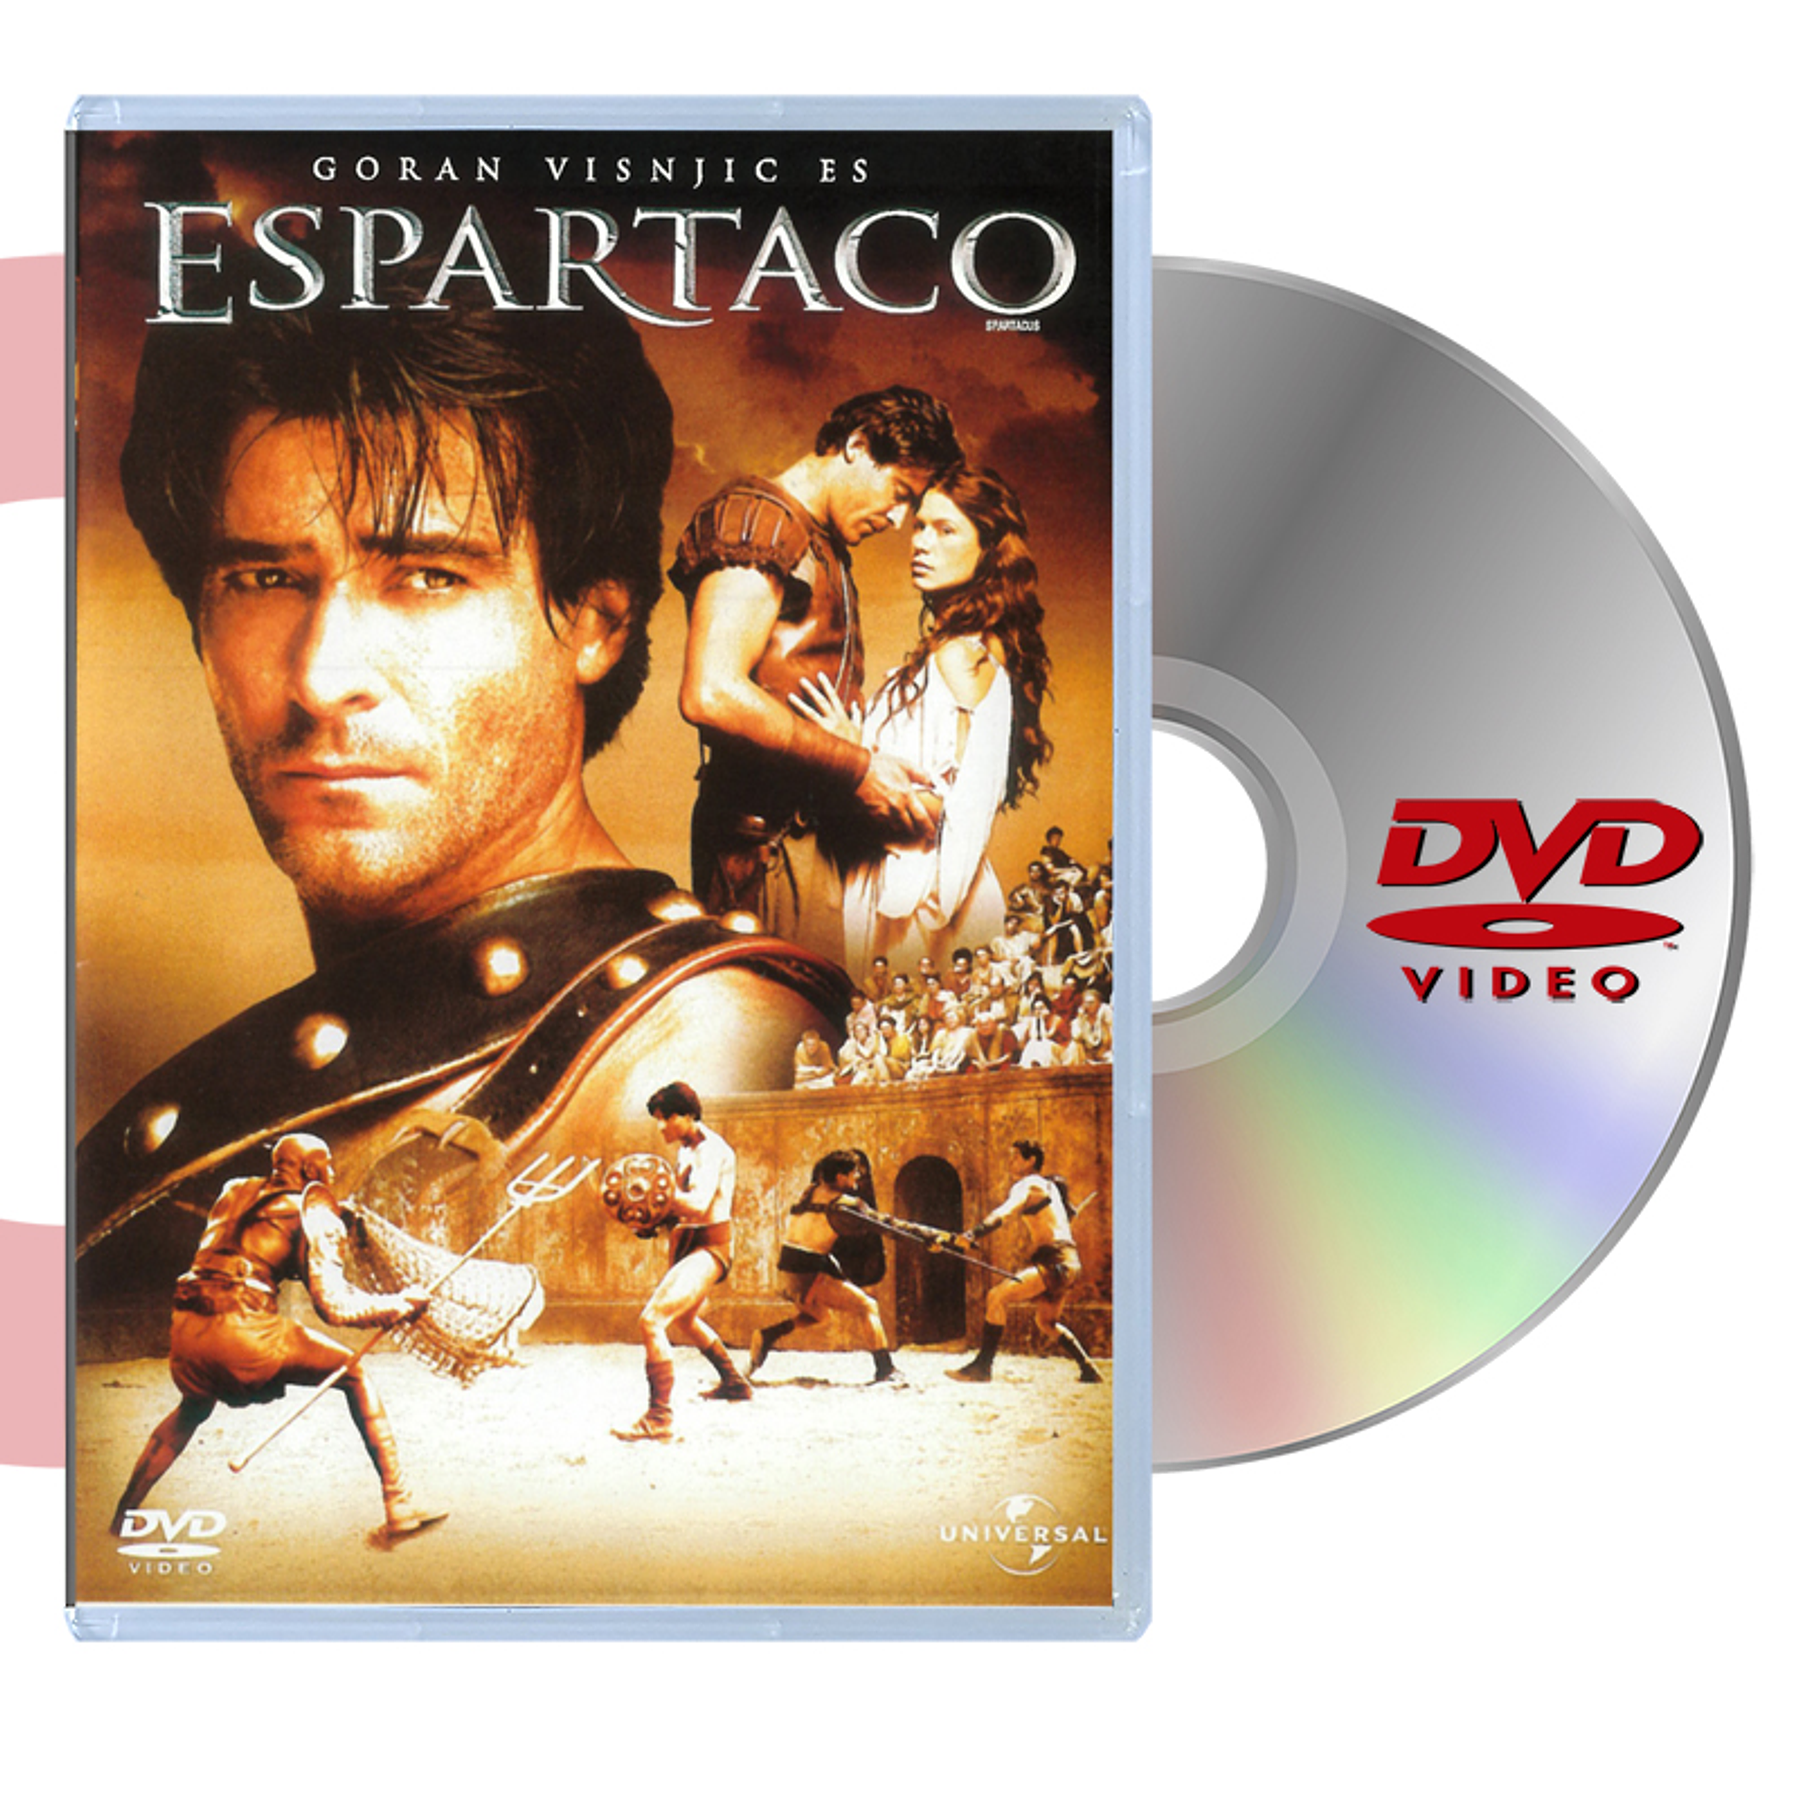 DVD ESPARTACO